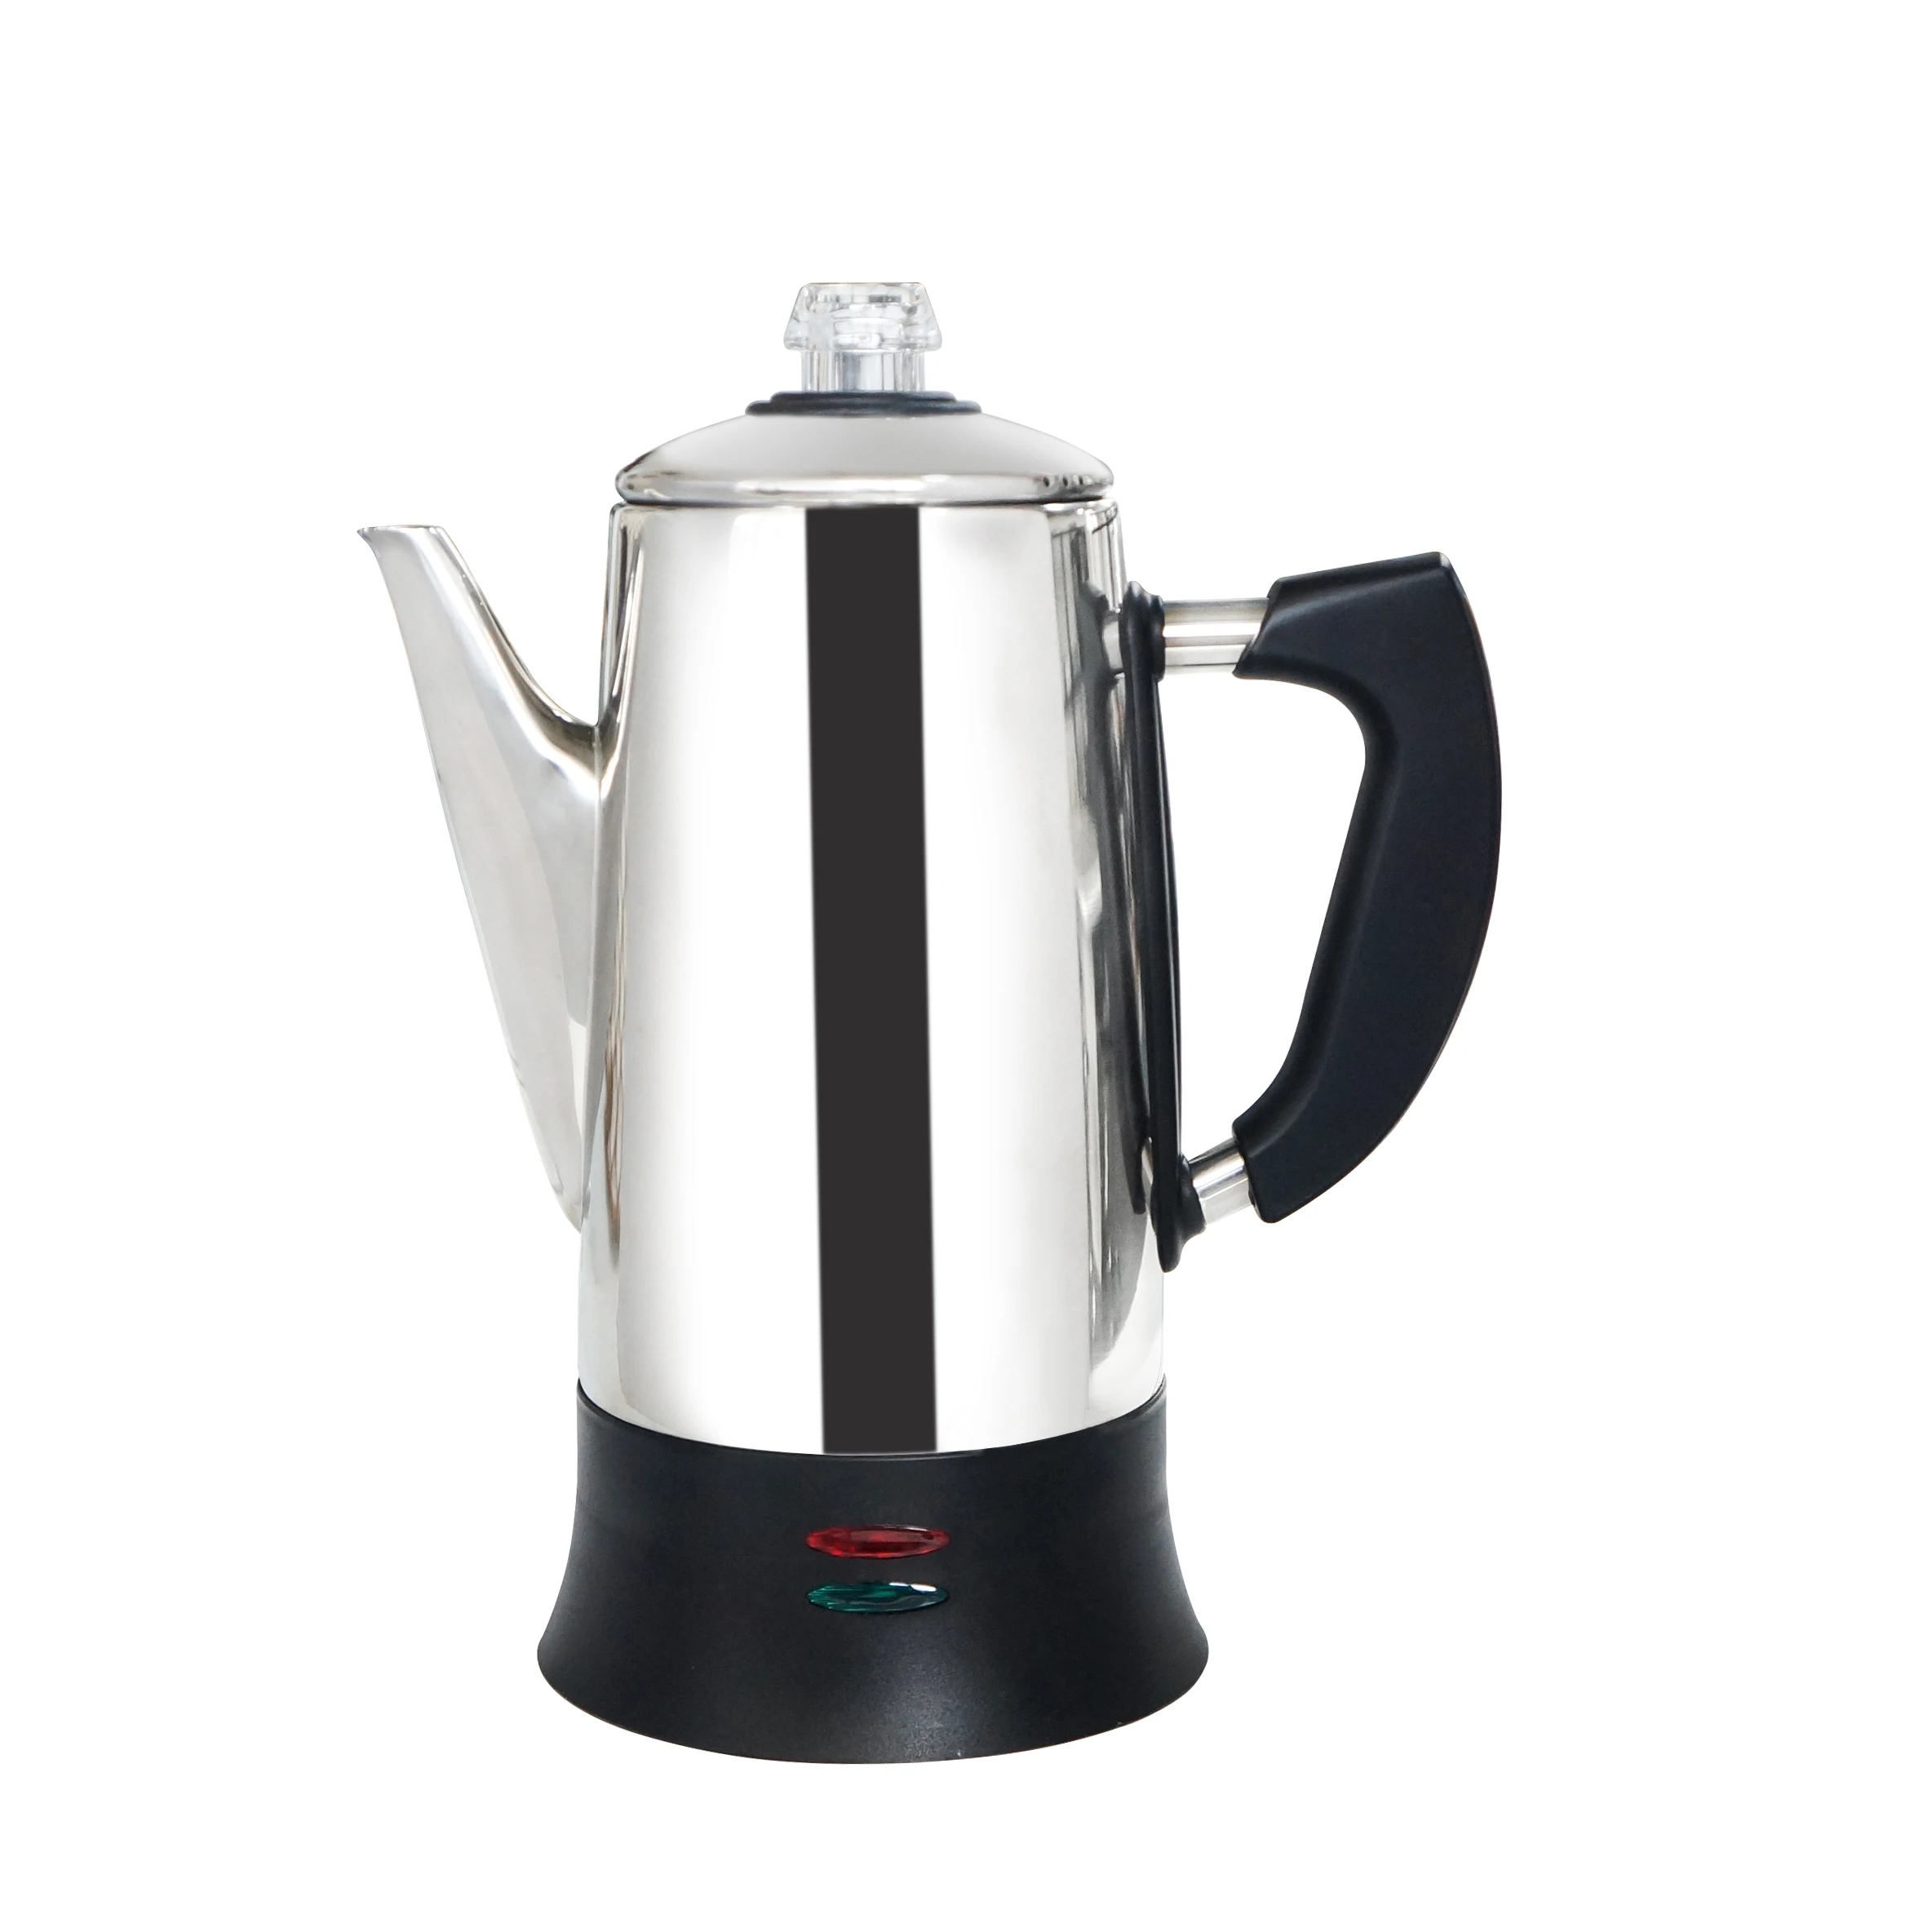 https://ae01.alicdn.com/kf/S50cef3cafd4343aeba9b0108830e6d65V/12-Cups-Stainless-Steel-Electric-Coffee-Pot-110v-220v-Coffee-Maker-Pot-Cafe-Percolator-Maker-Coffee.jpg